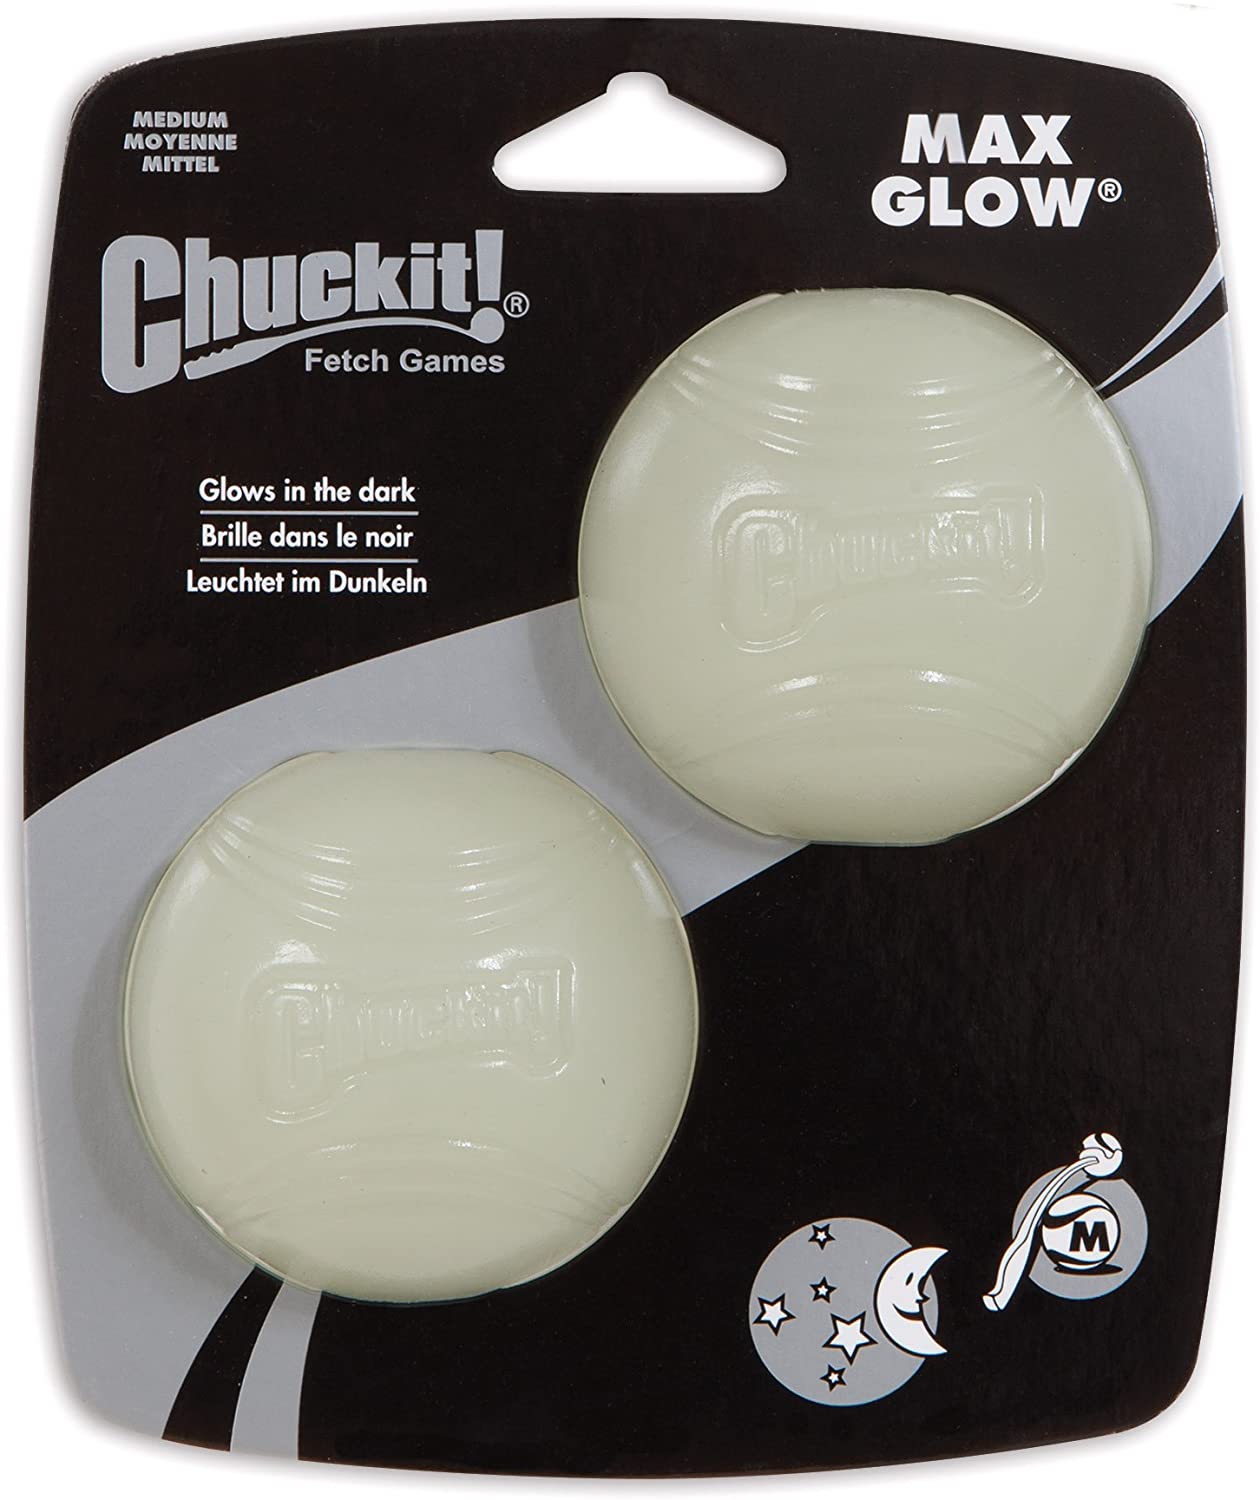 Chuckit! Max Glow Ball medium 2 pack $7.48